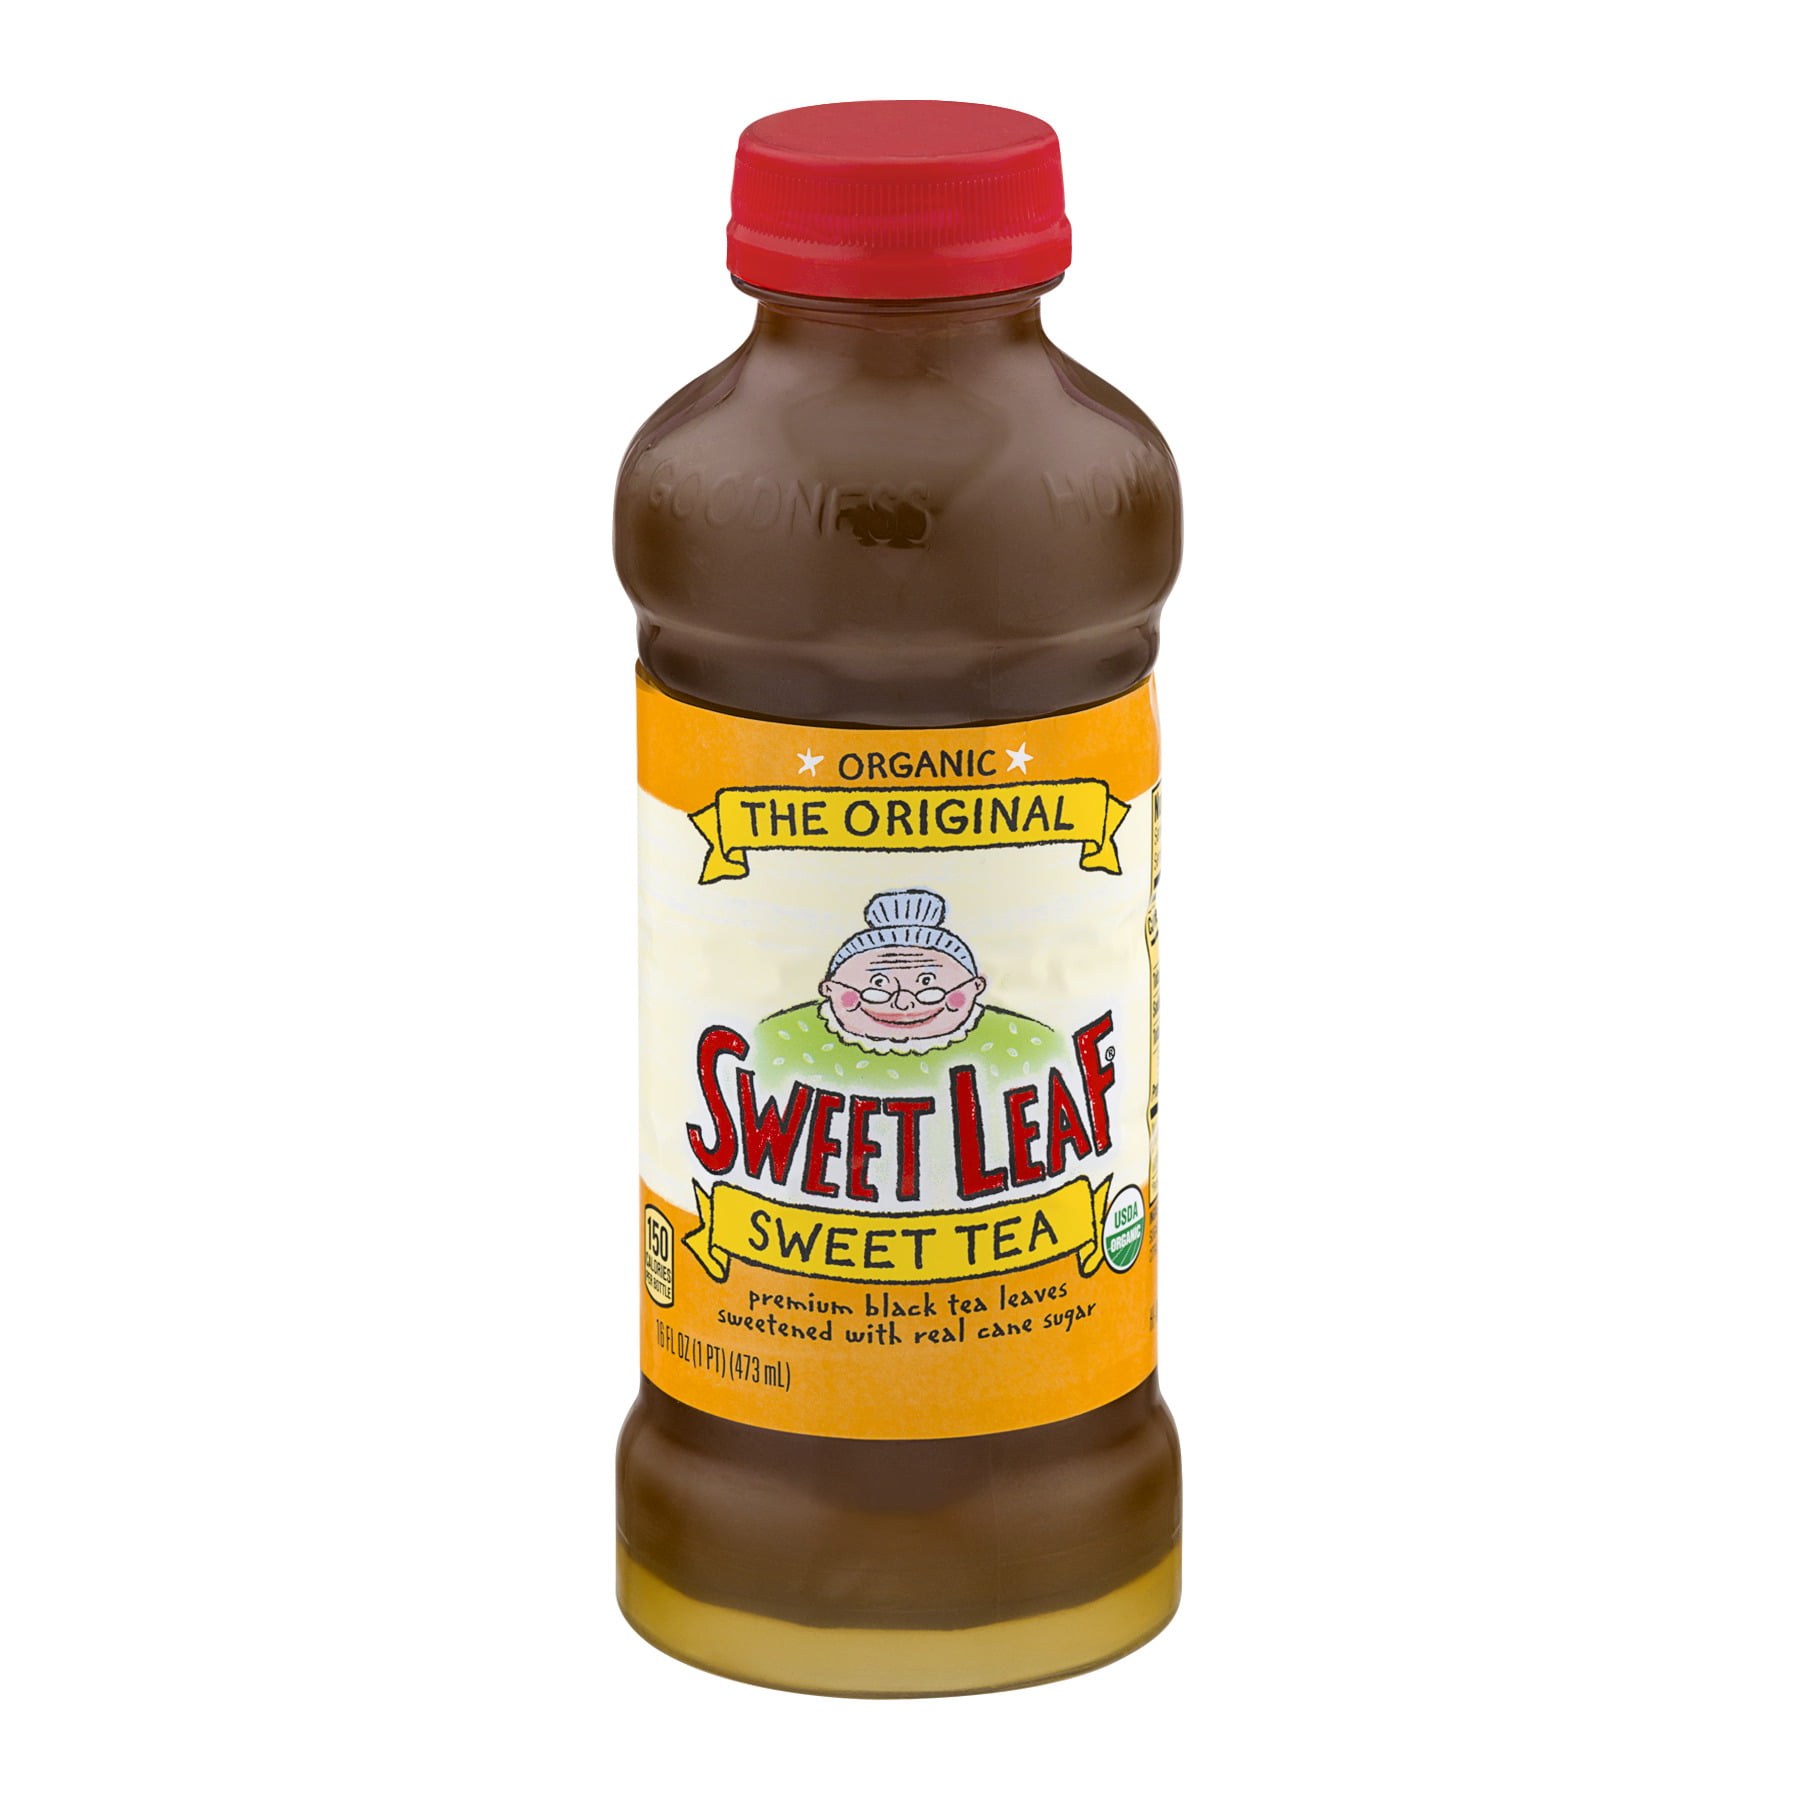 Sweet Leaf Organic The Original Sweet Tea, 16 Fl. Oz., 12 Count